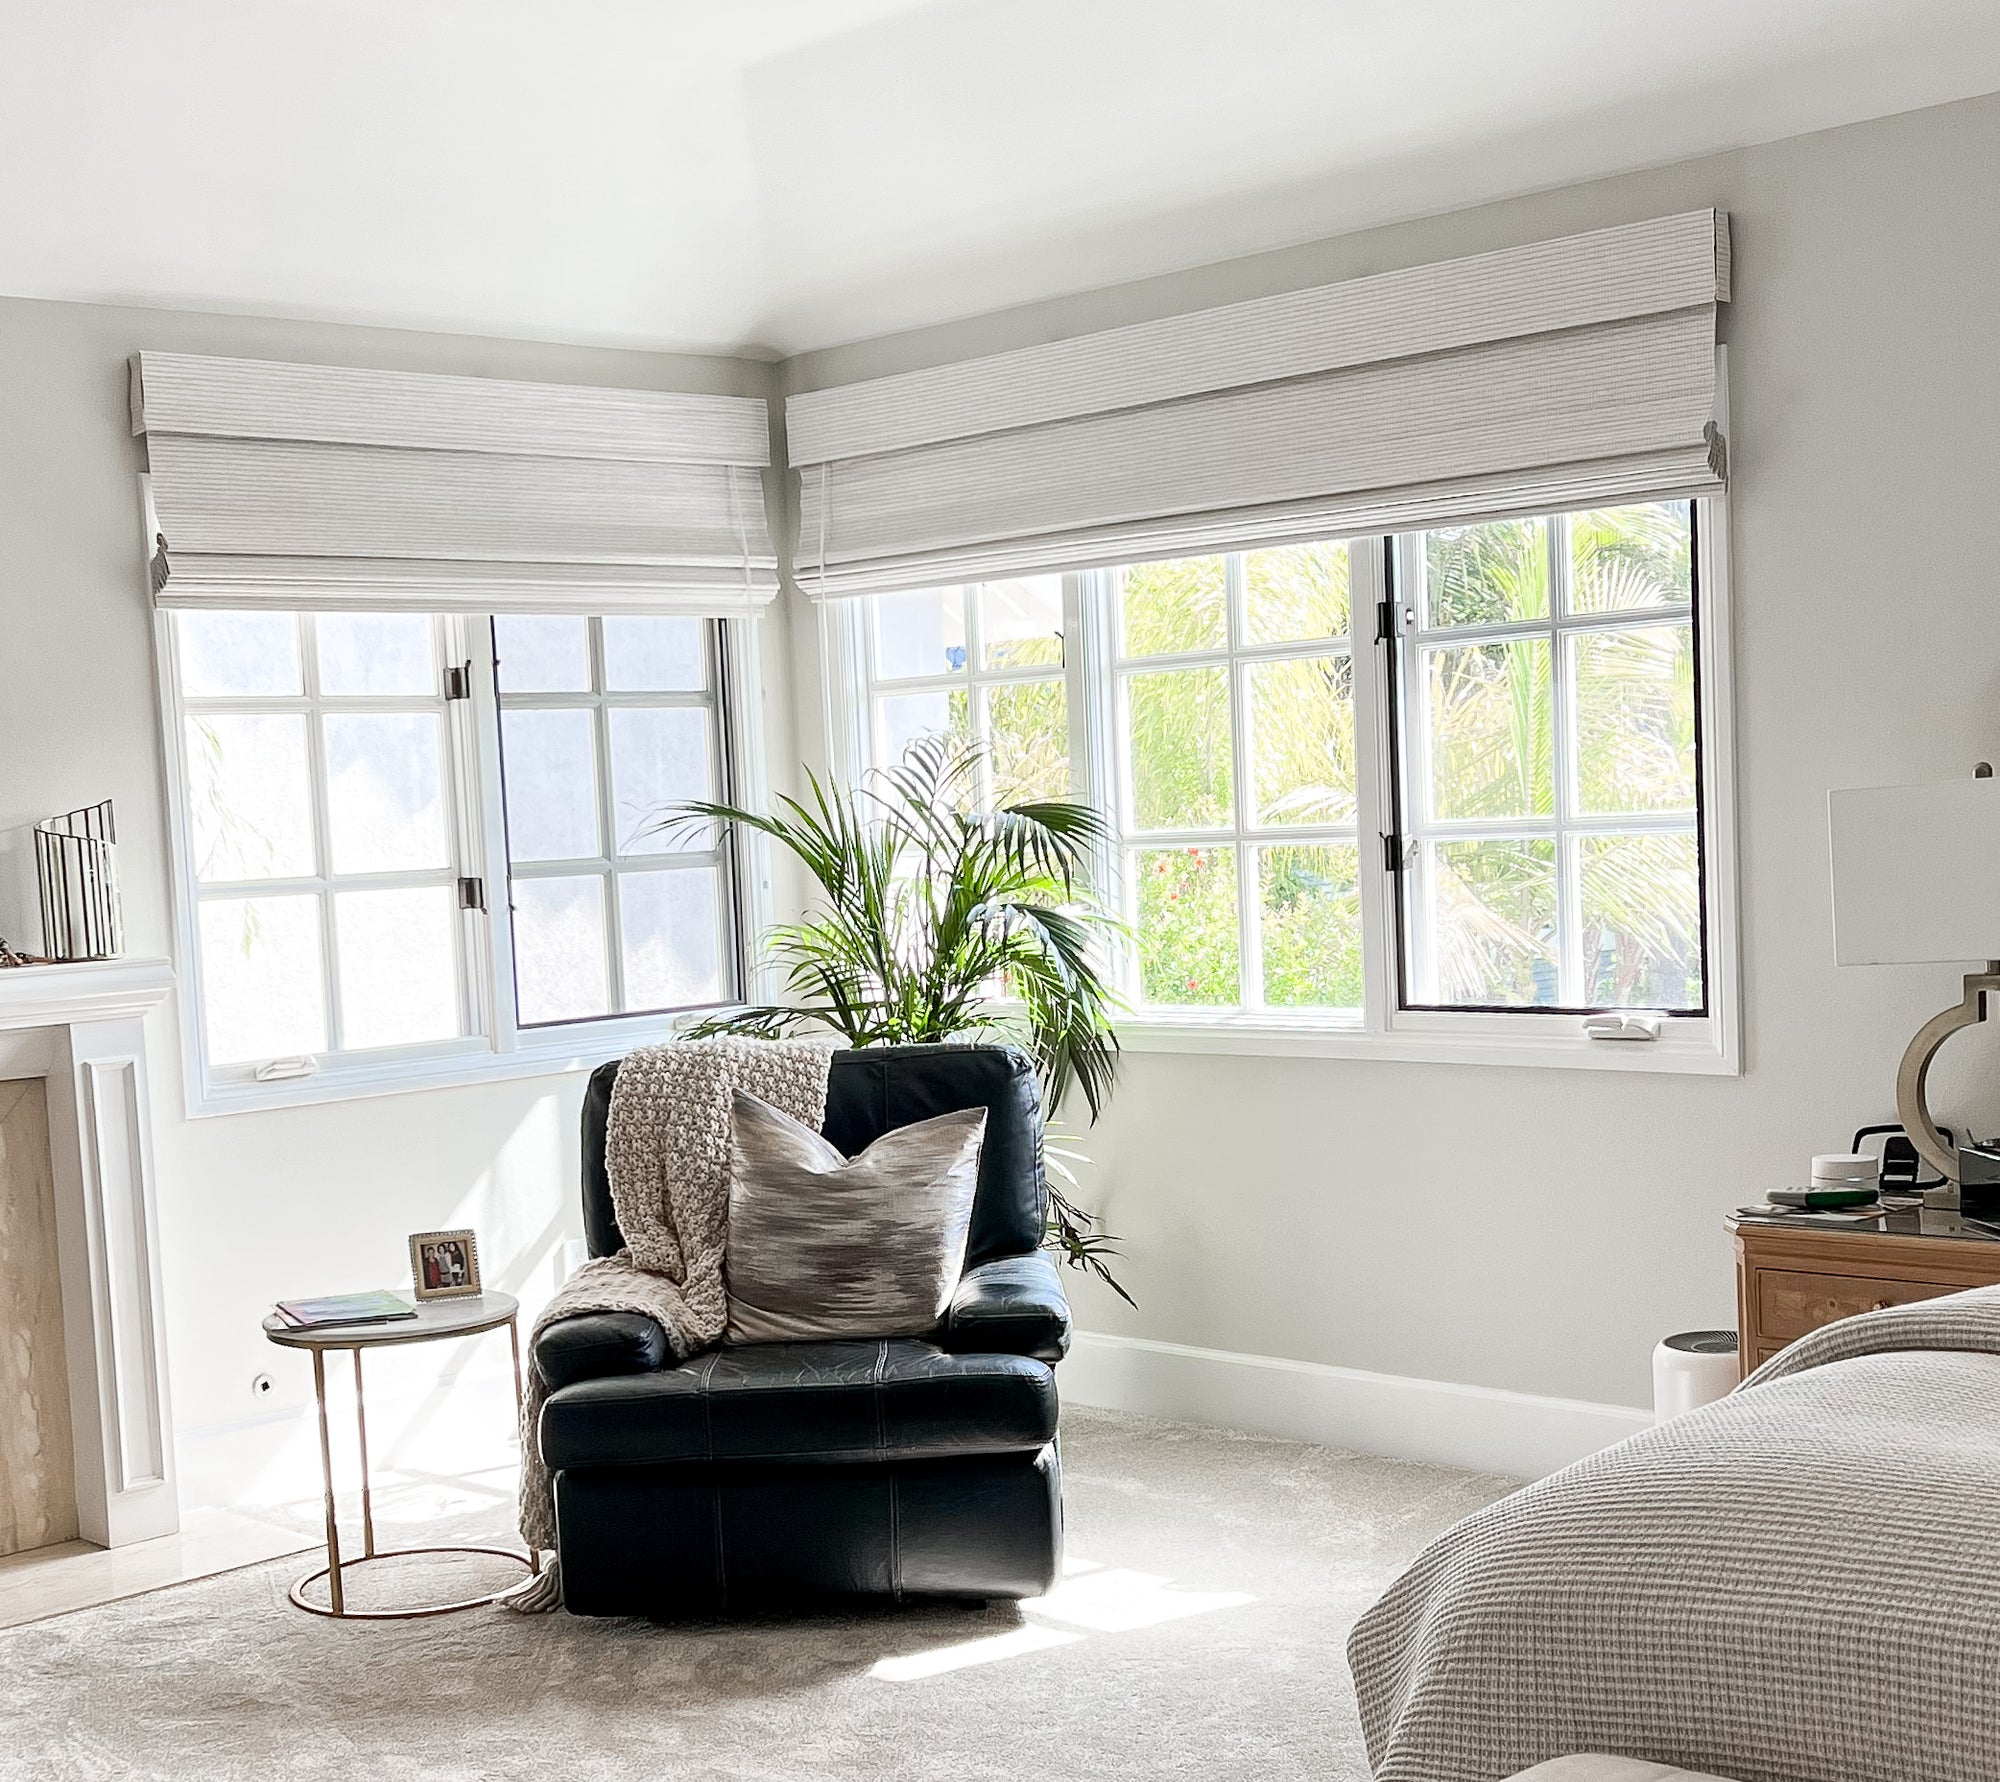 Best Bedroom Window Treatments Near Huntington Beach, California (CA) including woven woods and drapery. 